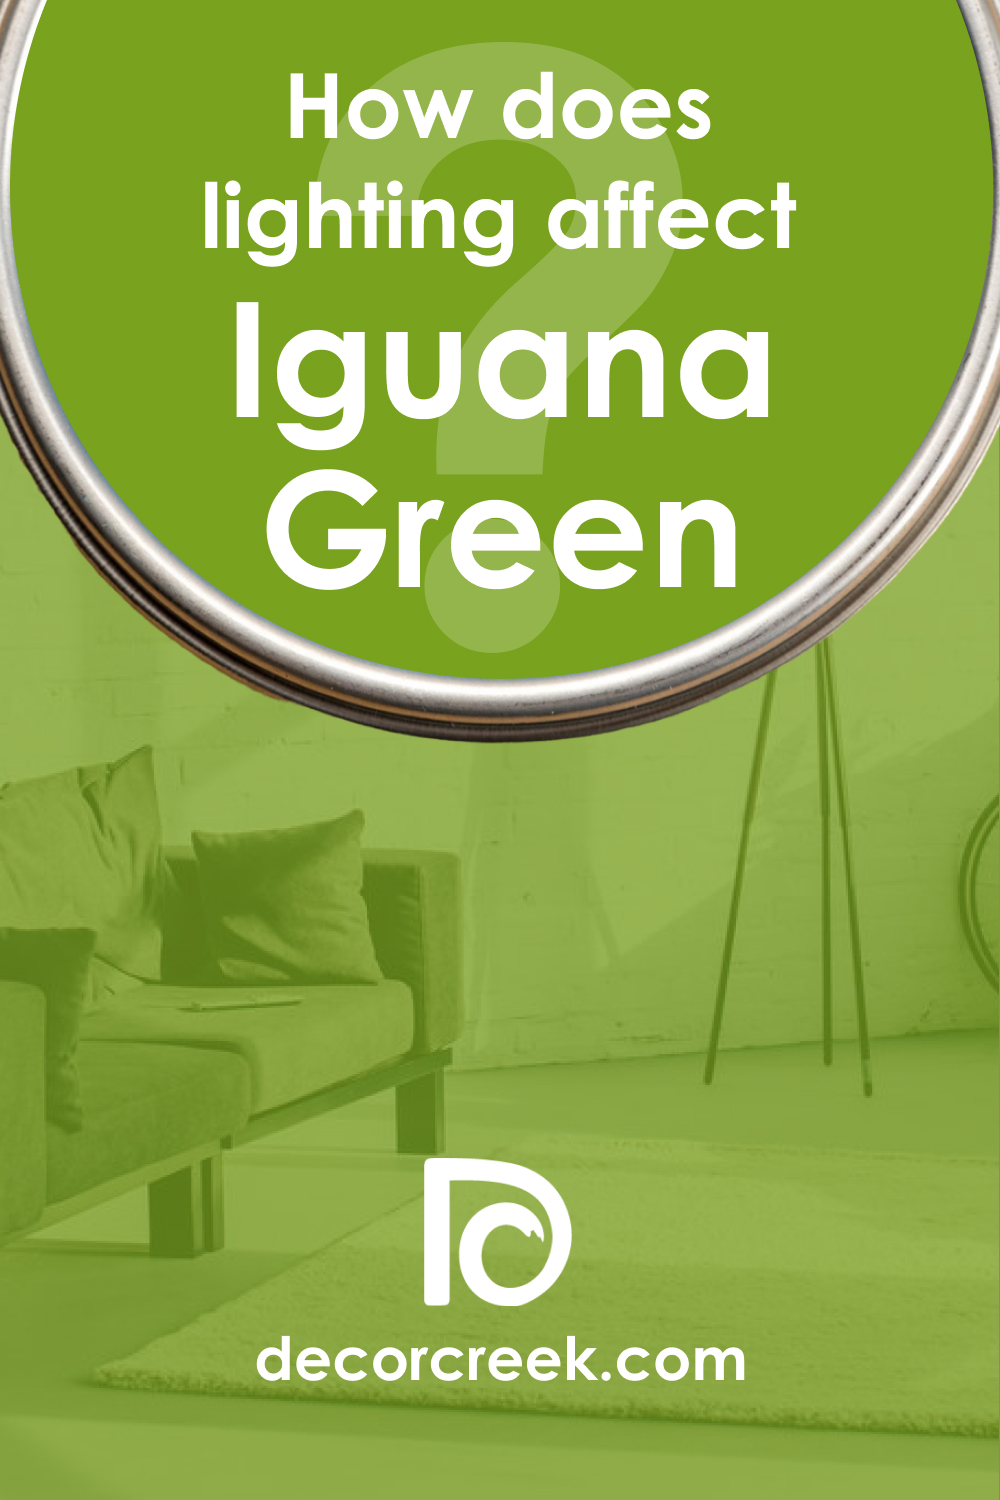 How Does Lighting Affect Iguana Green 2028-10?